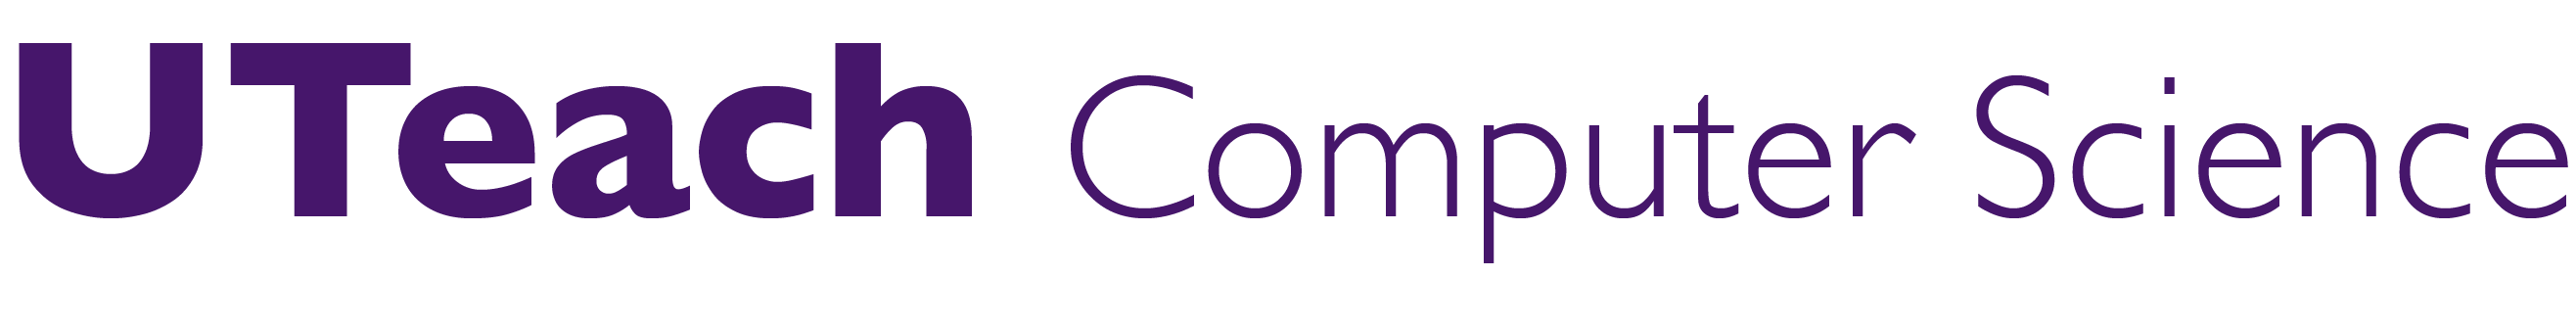 UTeach Computer Science logo